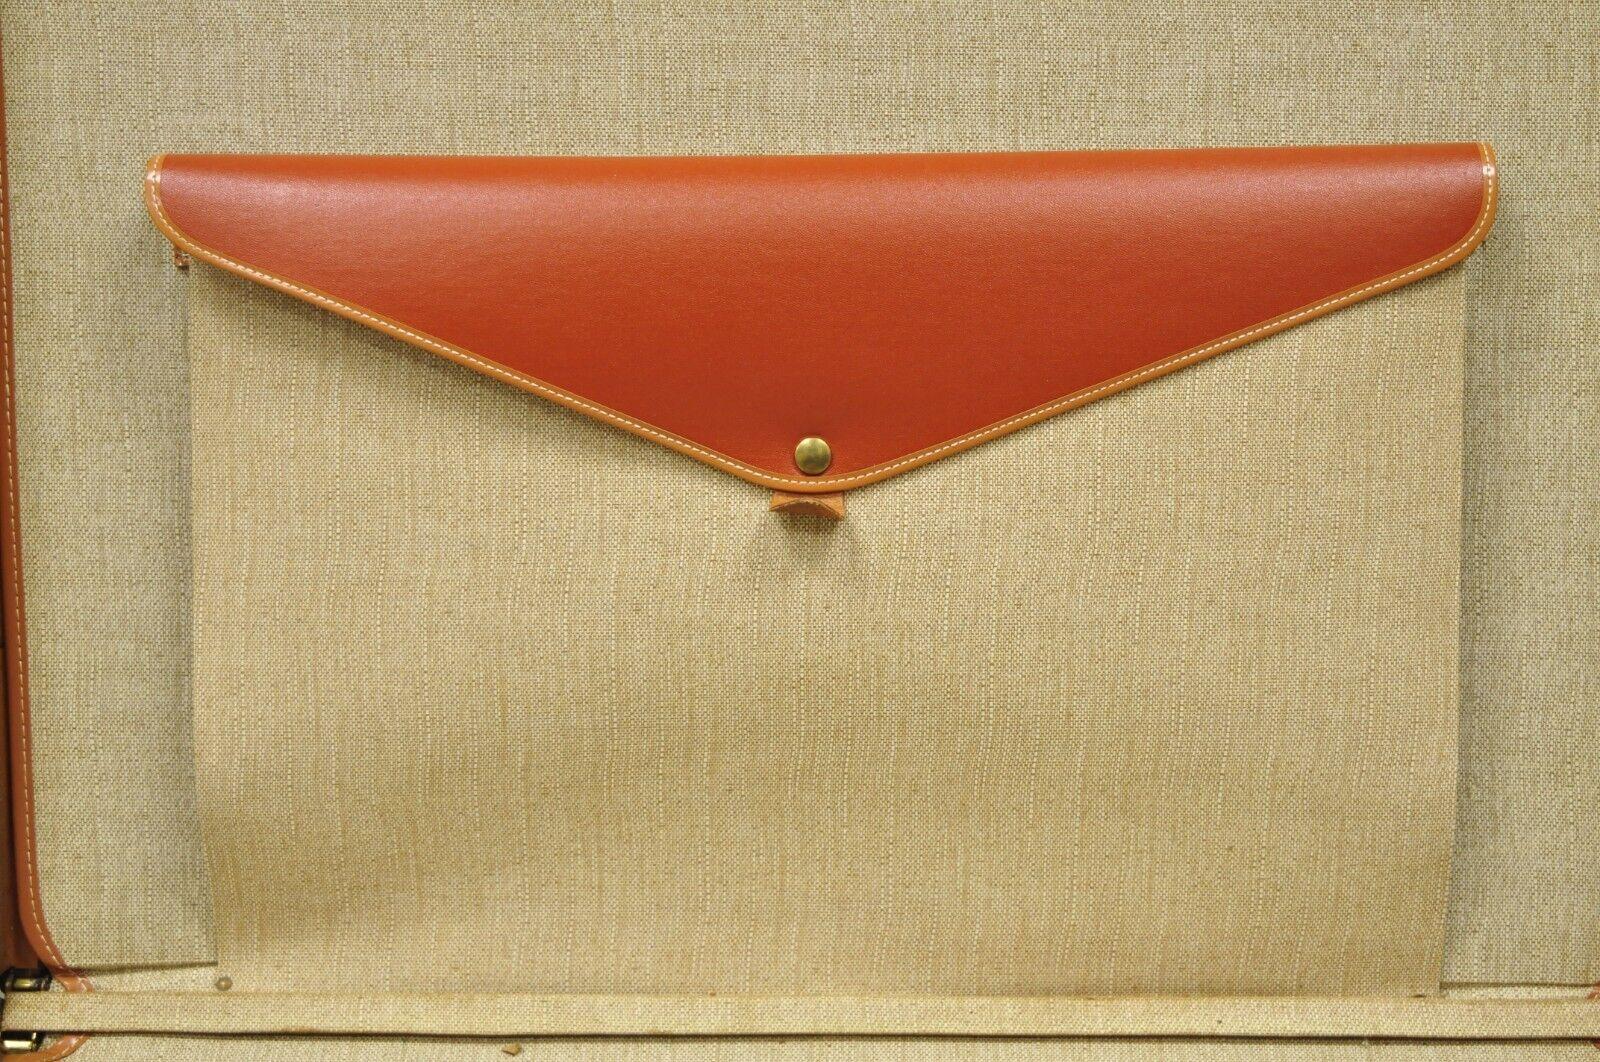 20th Century Vintage Genuine Top Grain Cowhide Leather Orange Suitcase Luggage